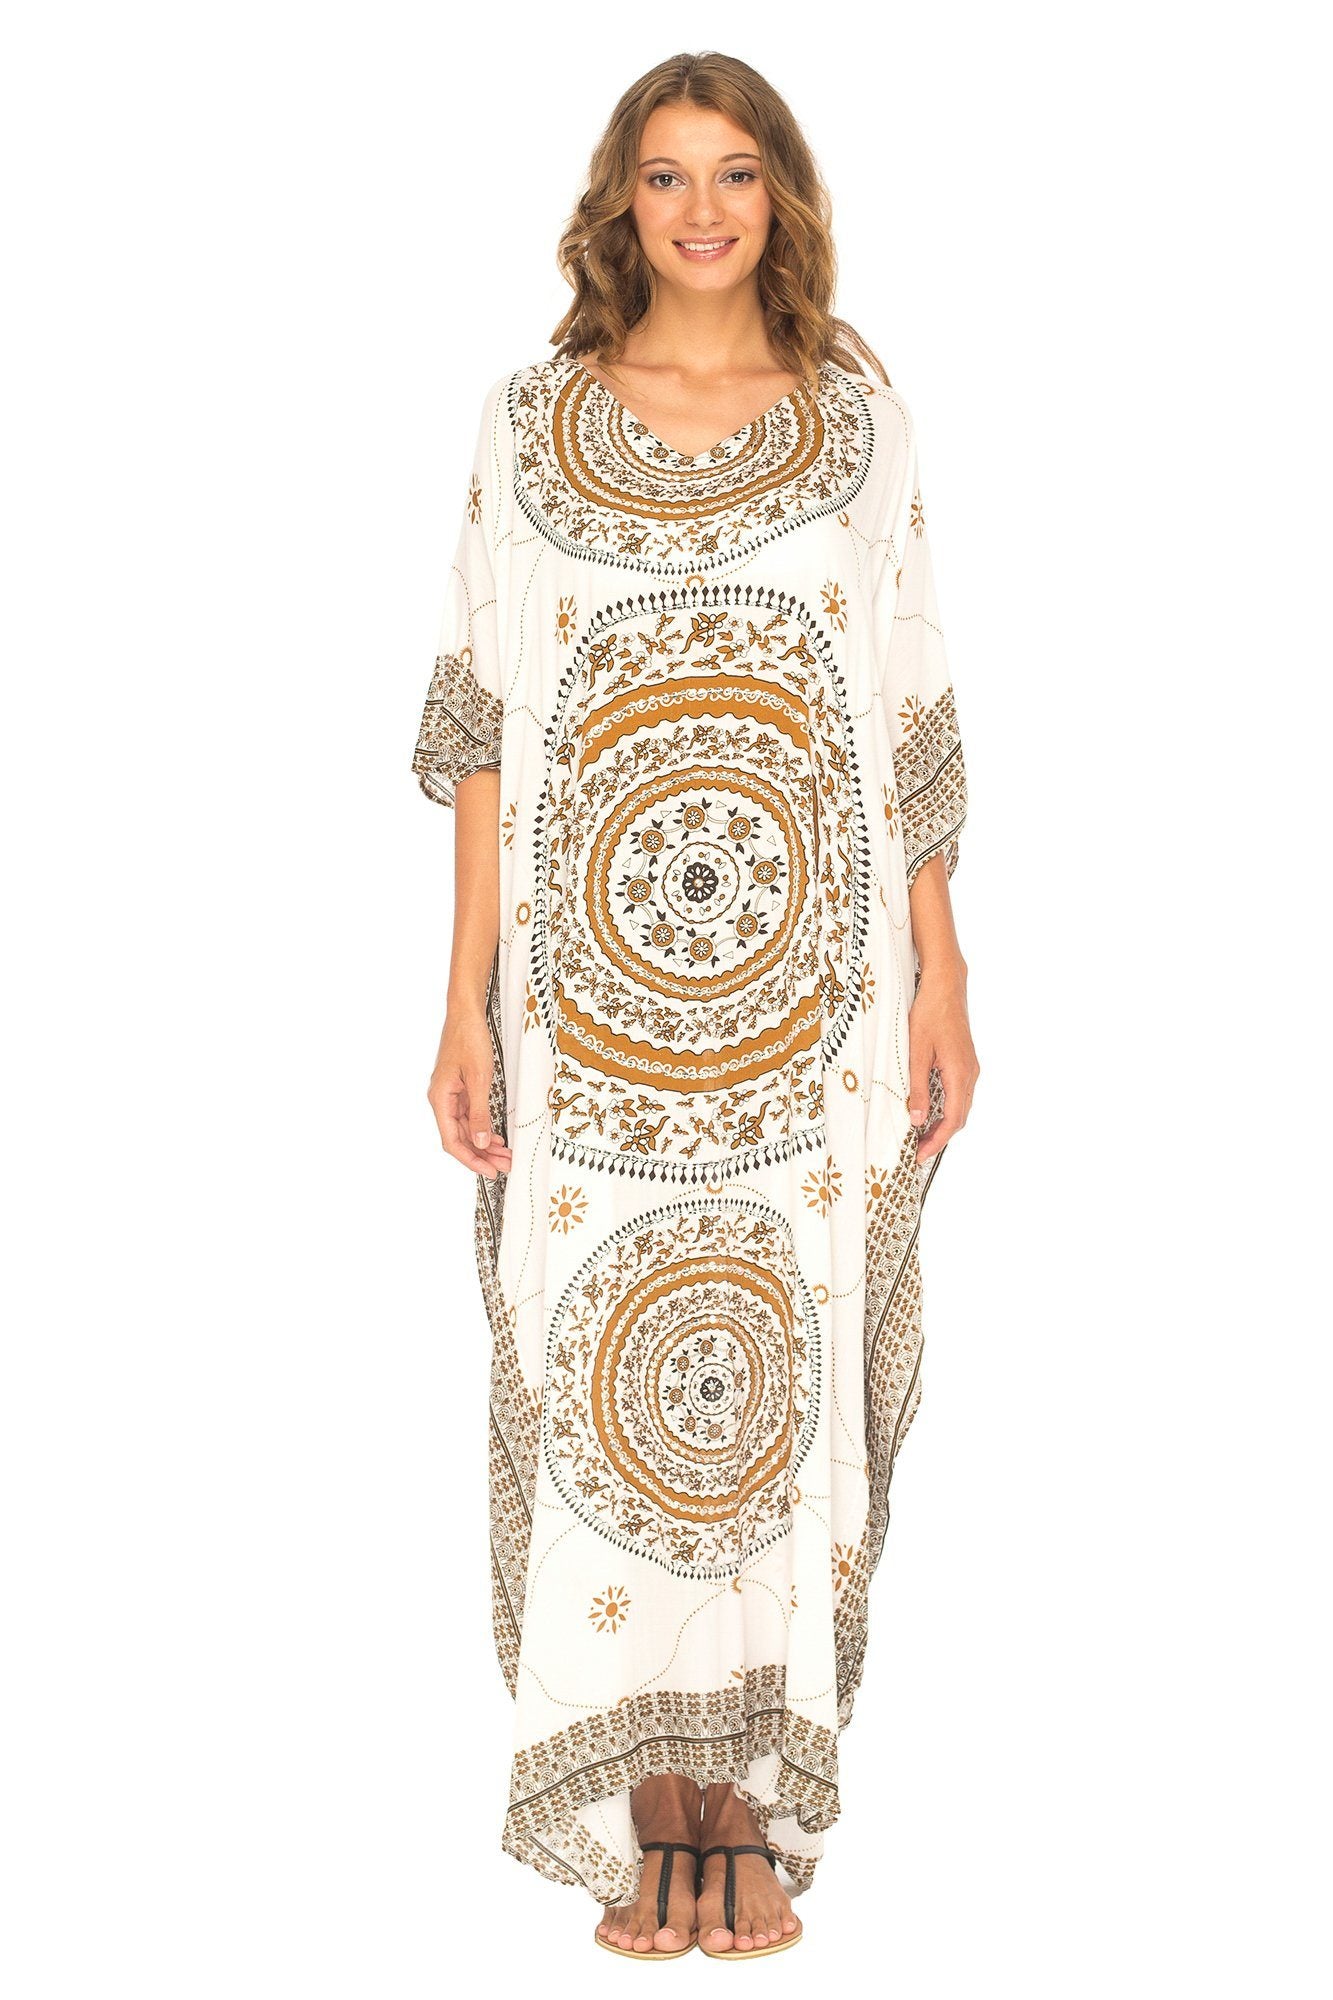 Mandala Print Long Kaftan Dress with Sequins - Love-Shu-Shi - White and Brown Kaftan Dress